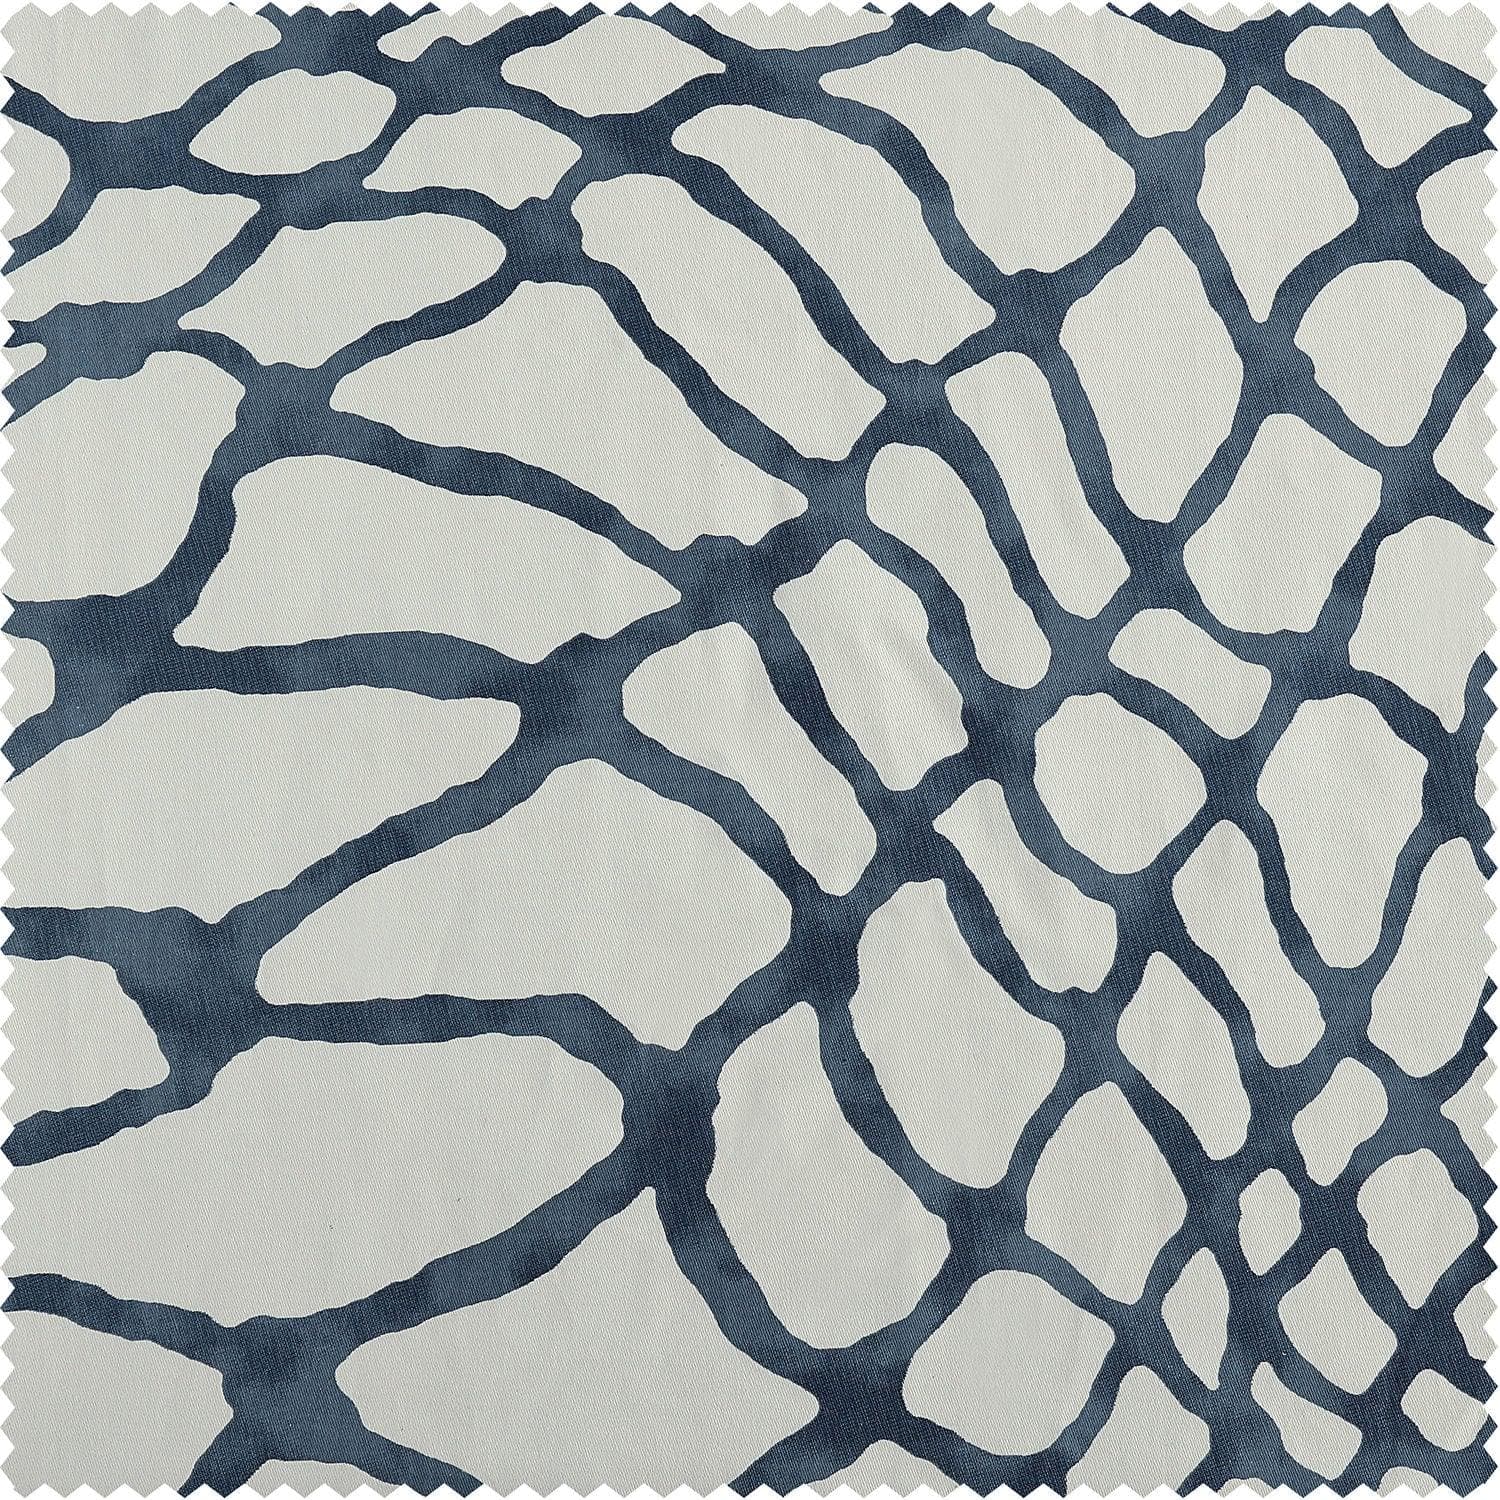 Ellis Blue Geometric Printed Cotton Cushion Covers - Pair